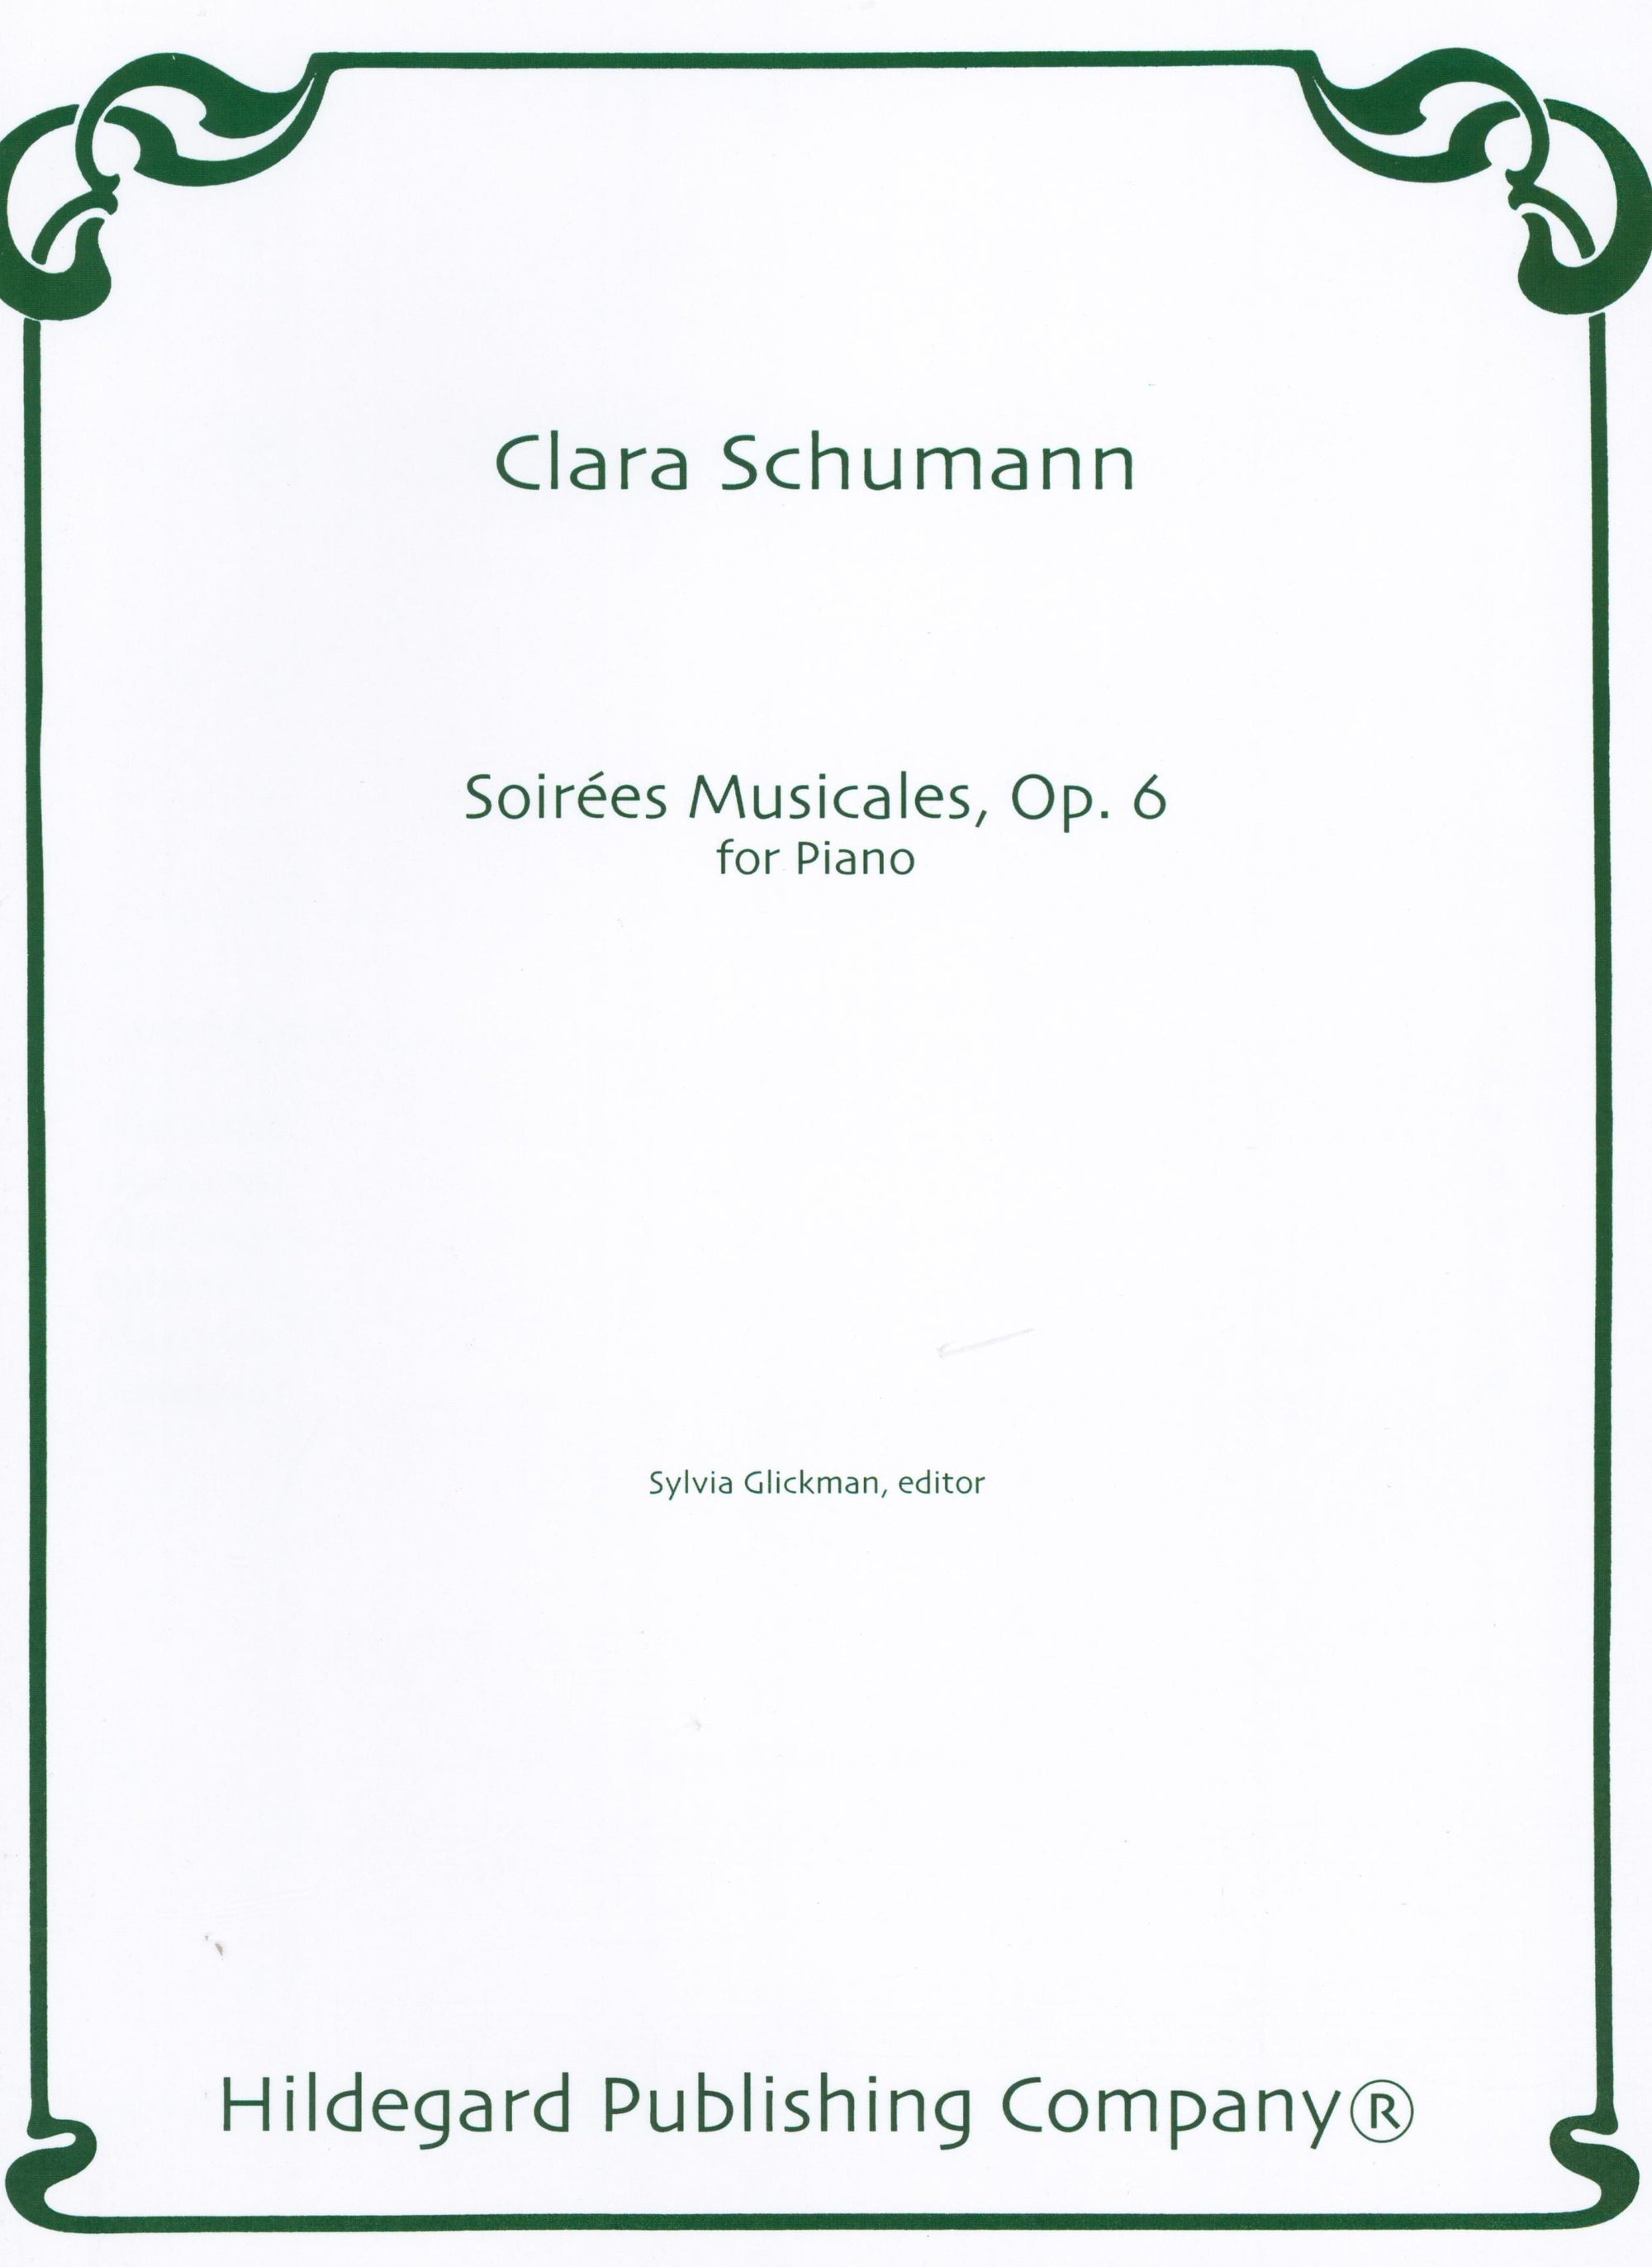 Cl. Schumann: Soirées musicales, Op. 6